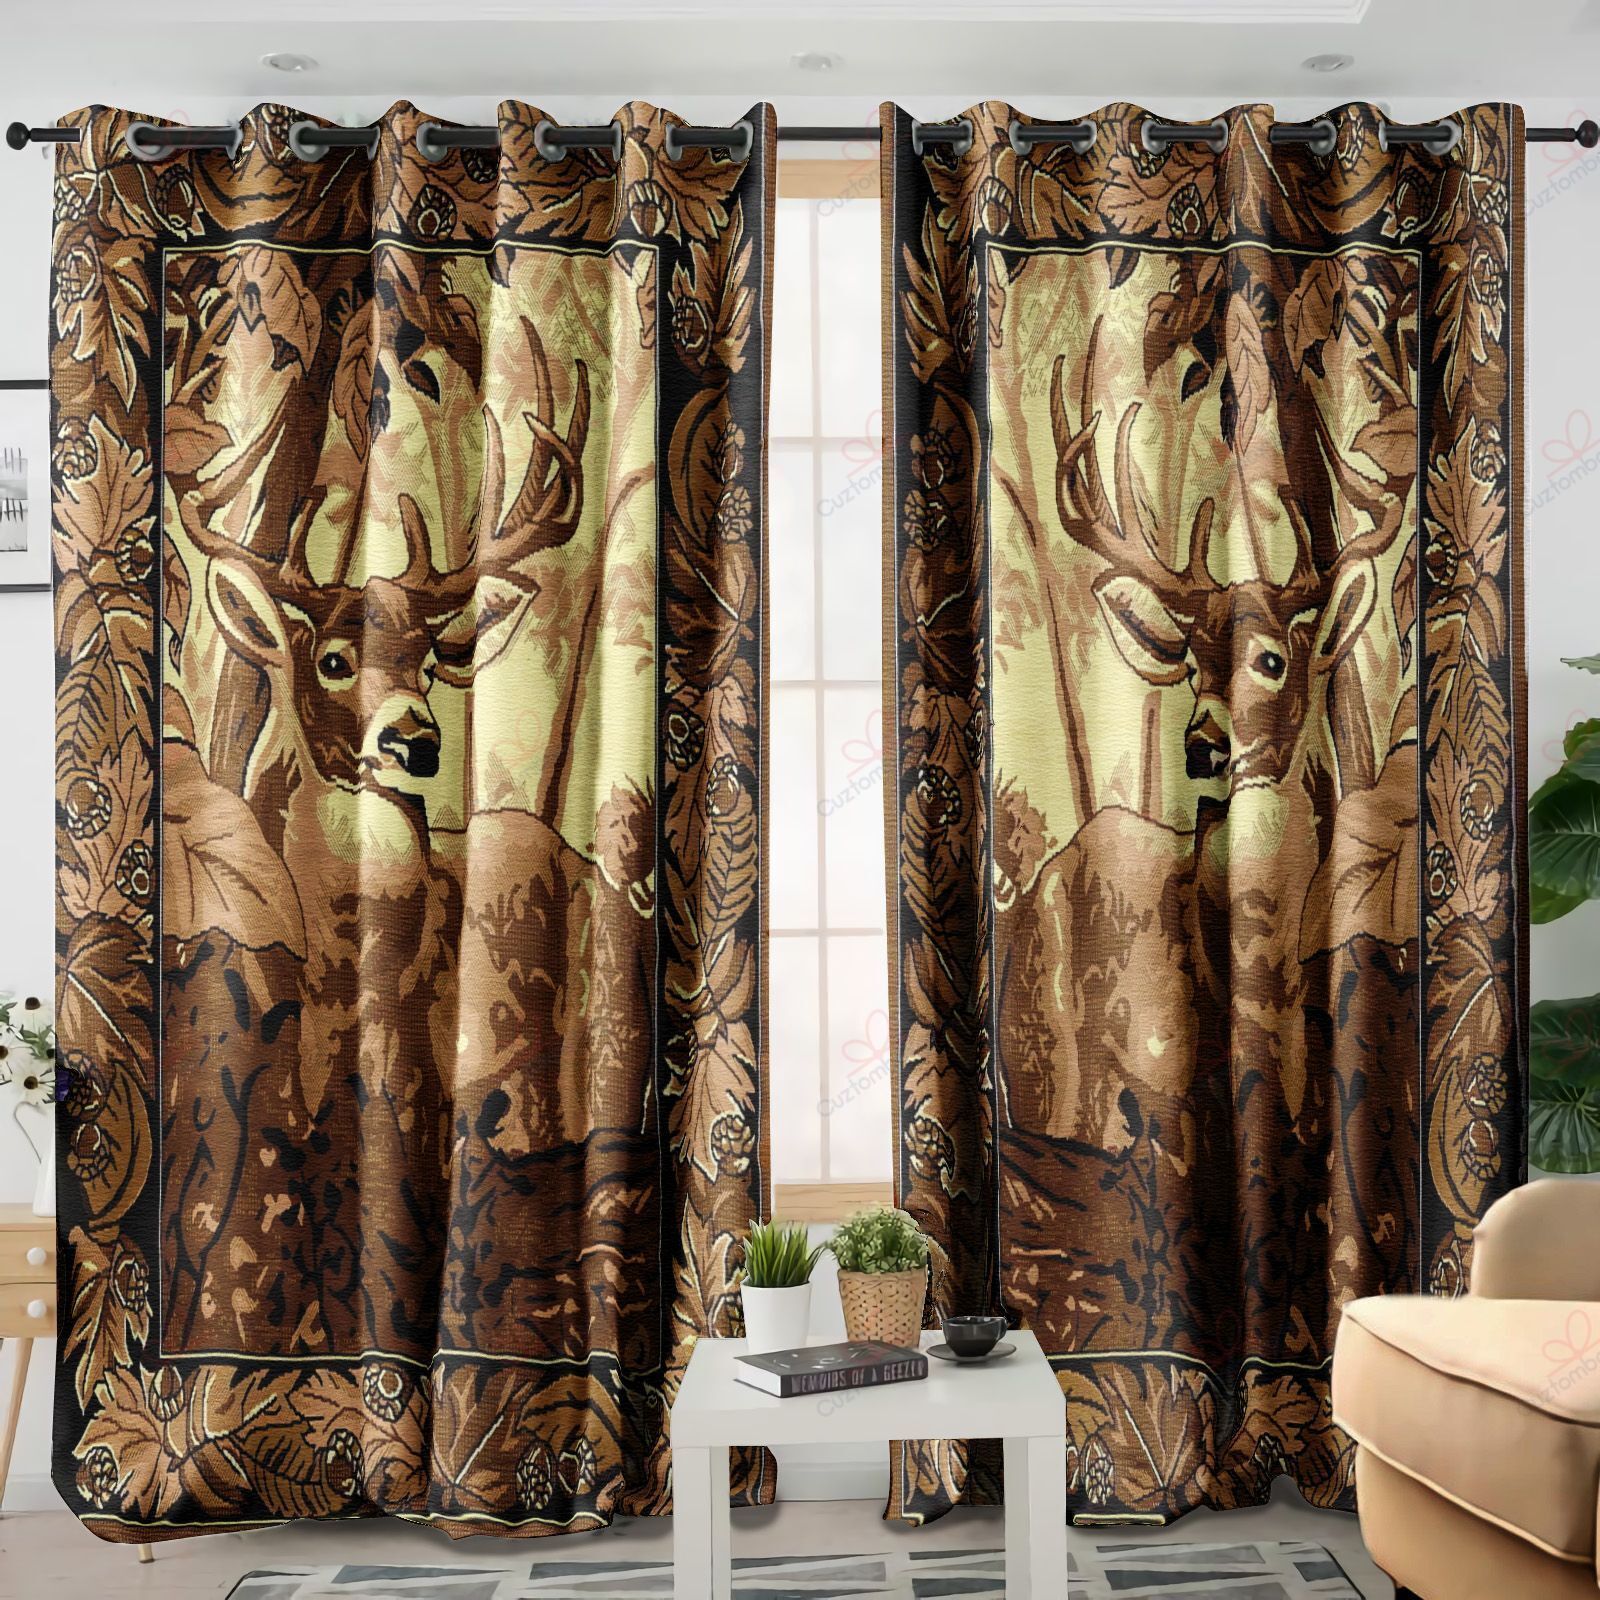 Deer Printed Window Curtains Home Decor